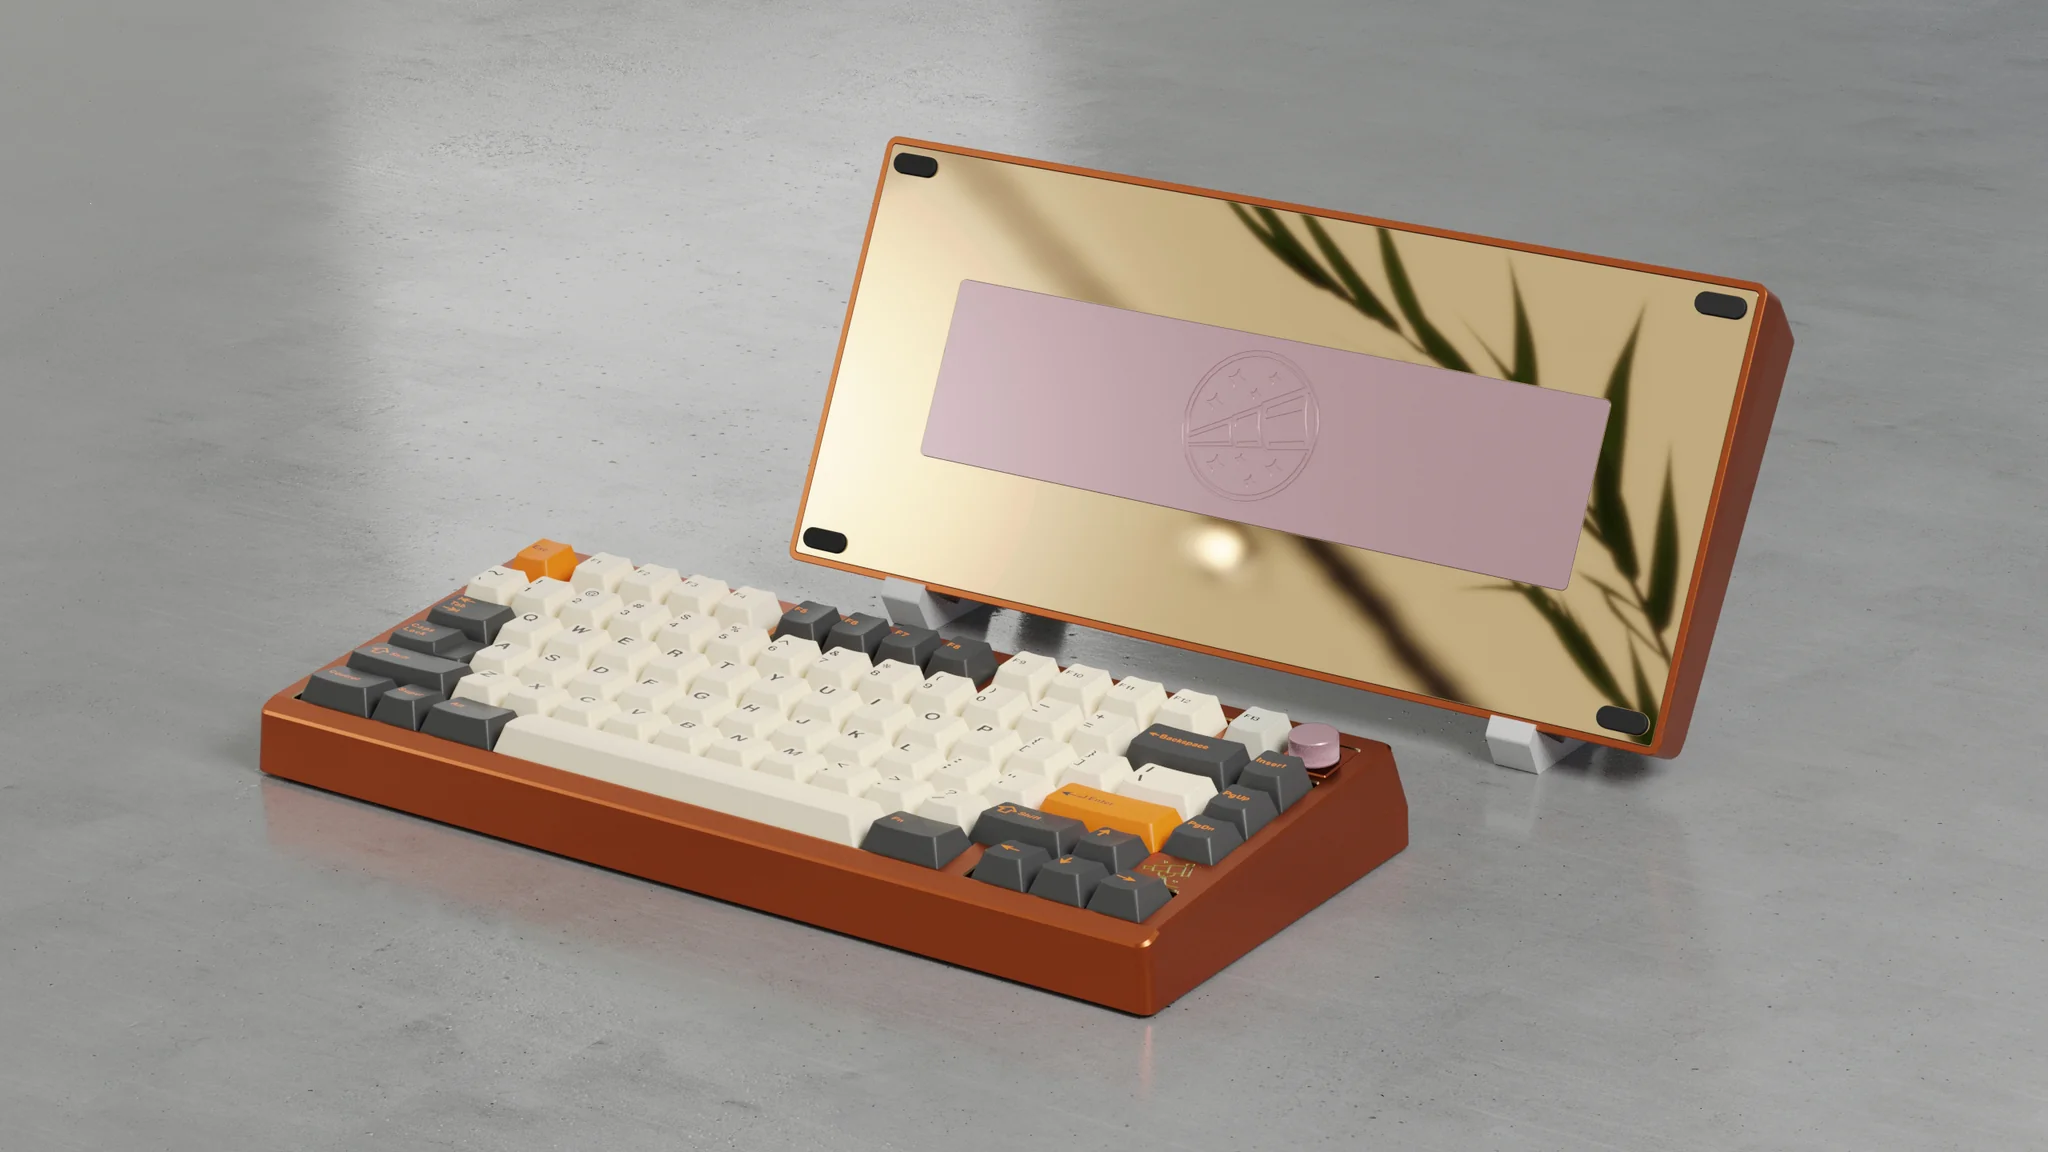 [Group-Buy] Meletrix Zoom75 Special Edition (SE) - Barebones Keyboard Kit - Anodized Orange